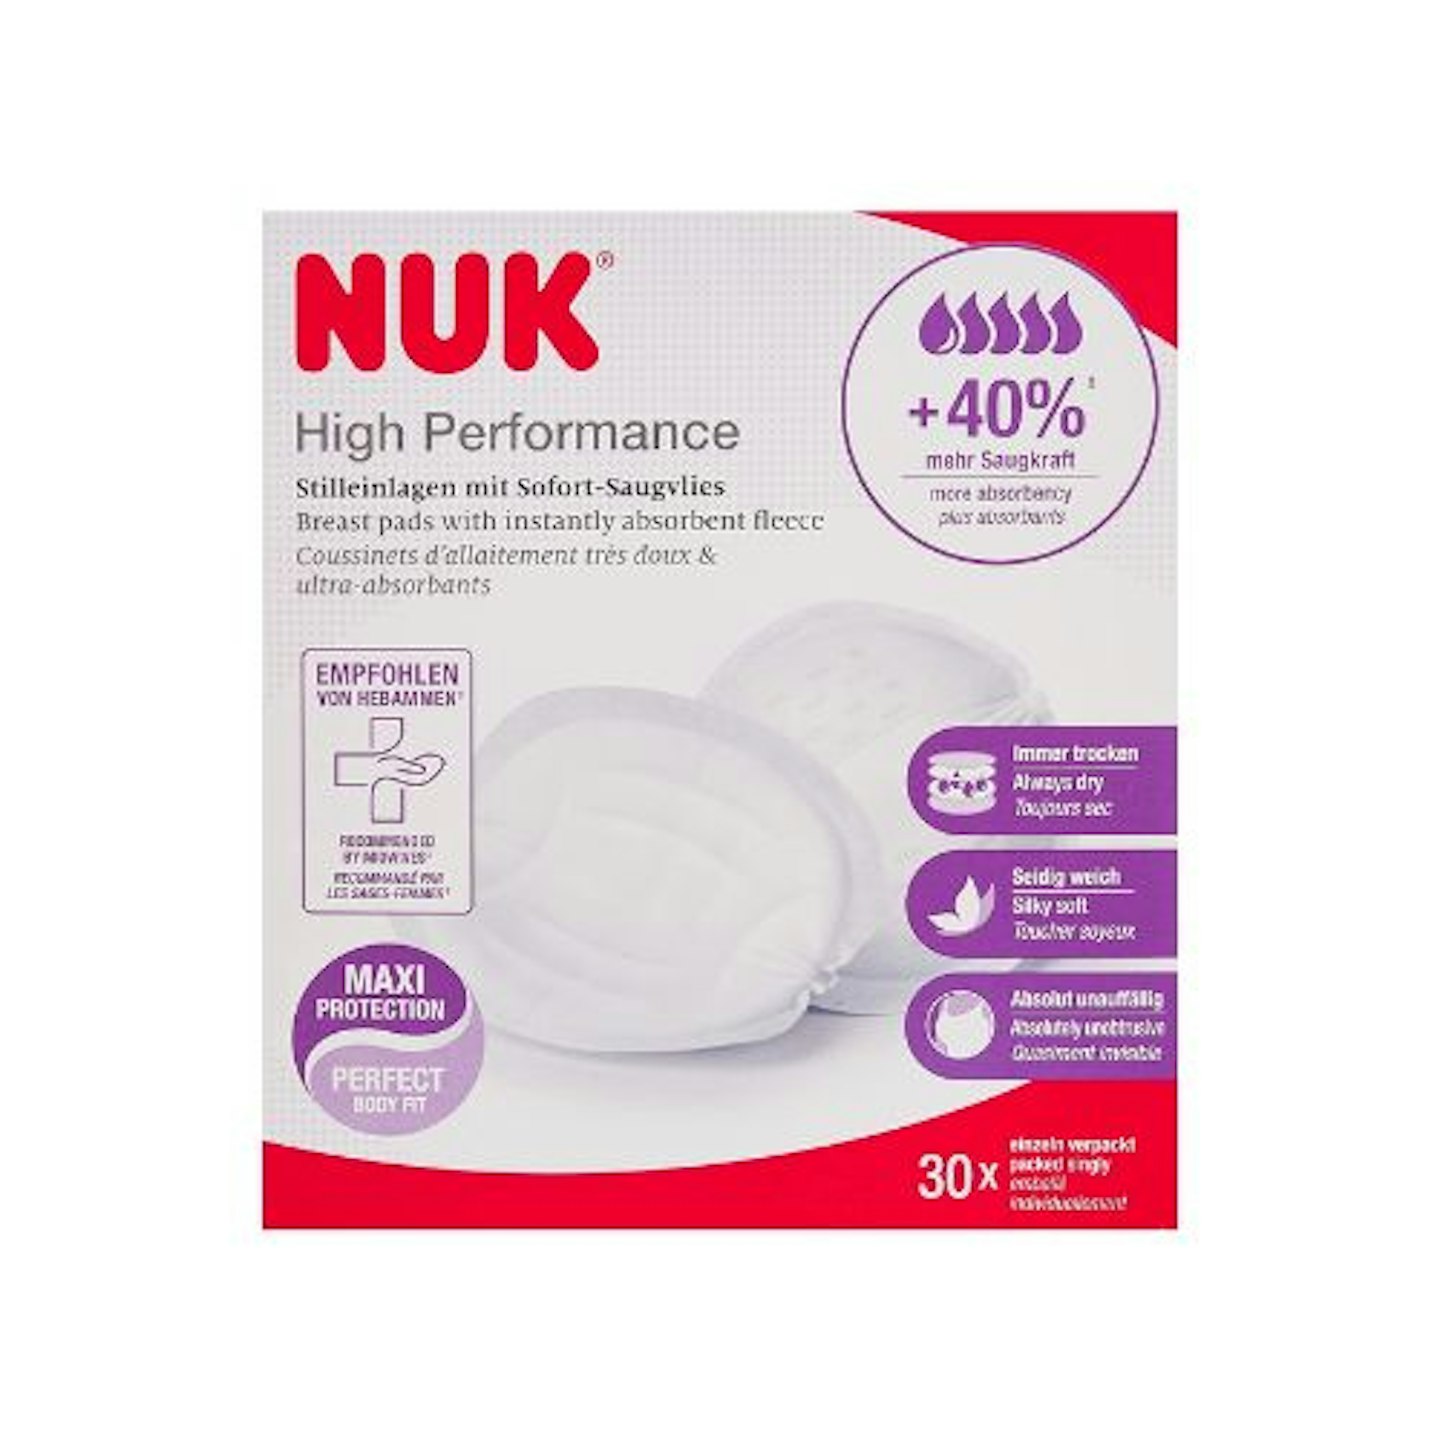 NUK Ultra Thin Nursing Pads